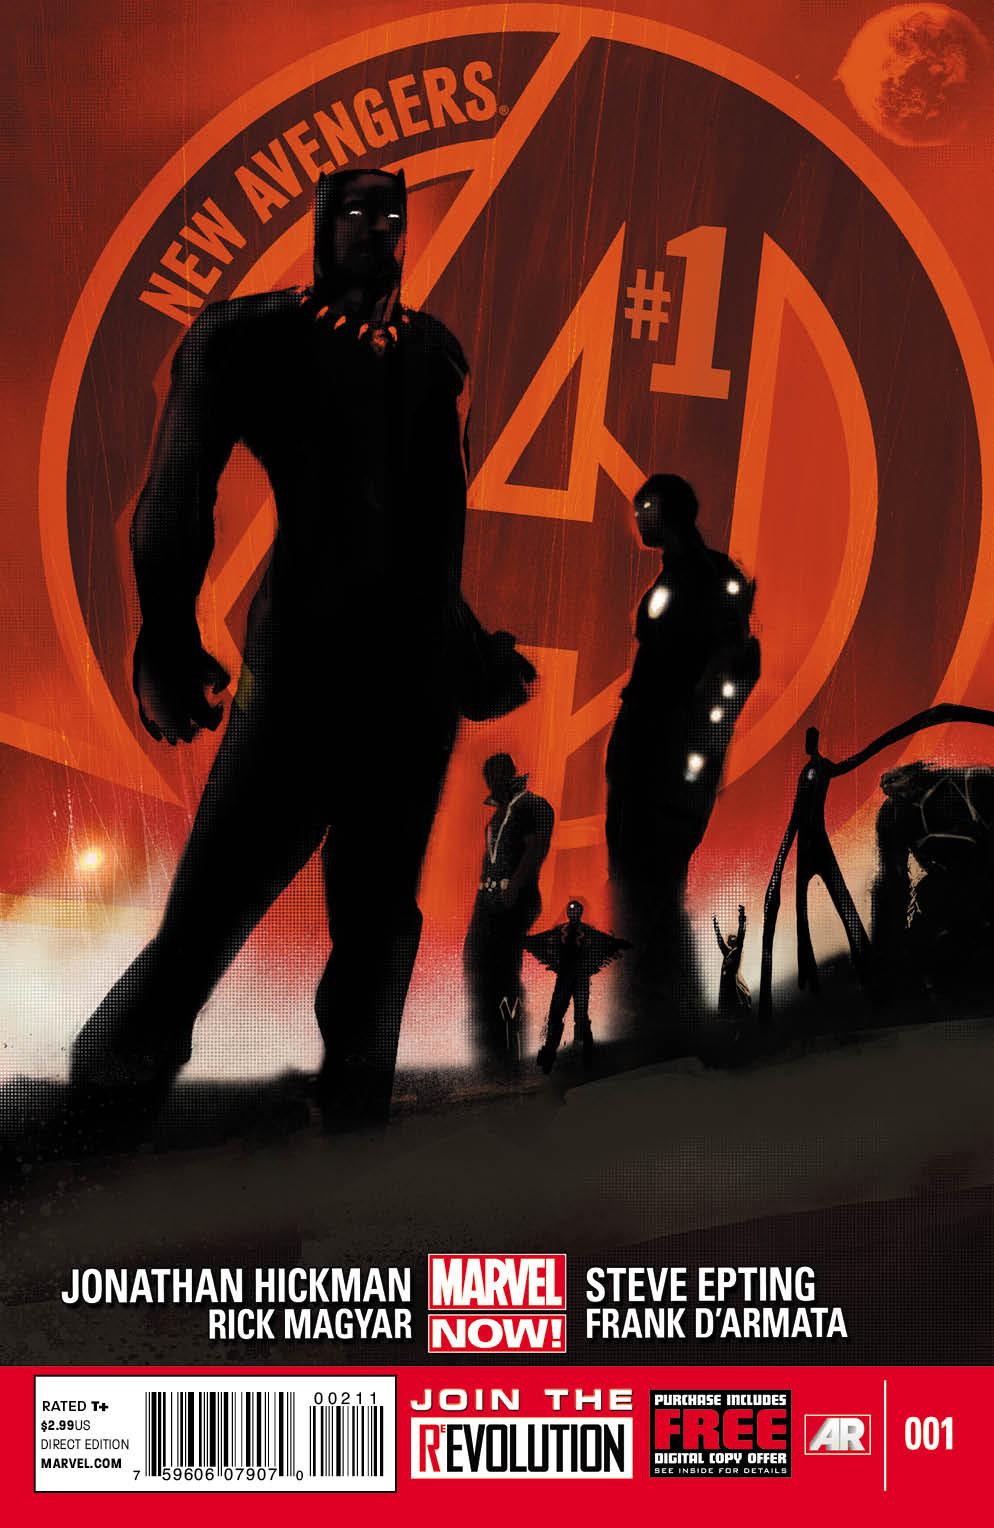 New Avengers Vol. 3 #1